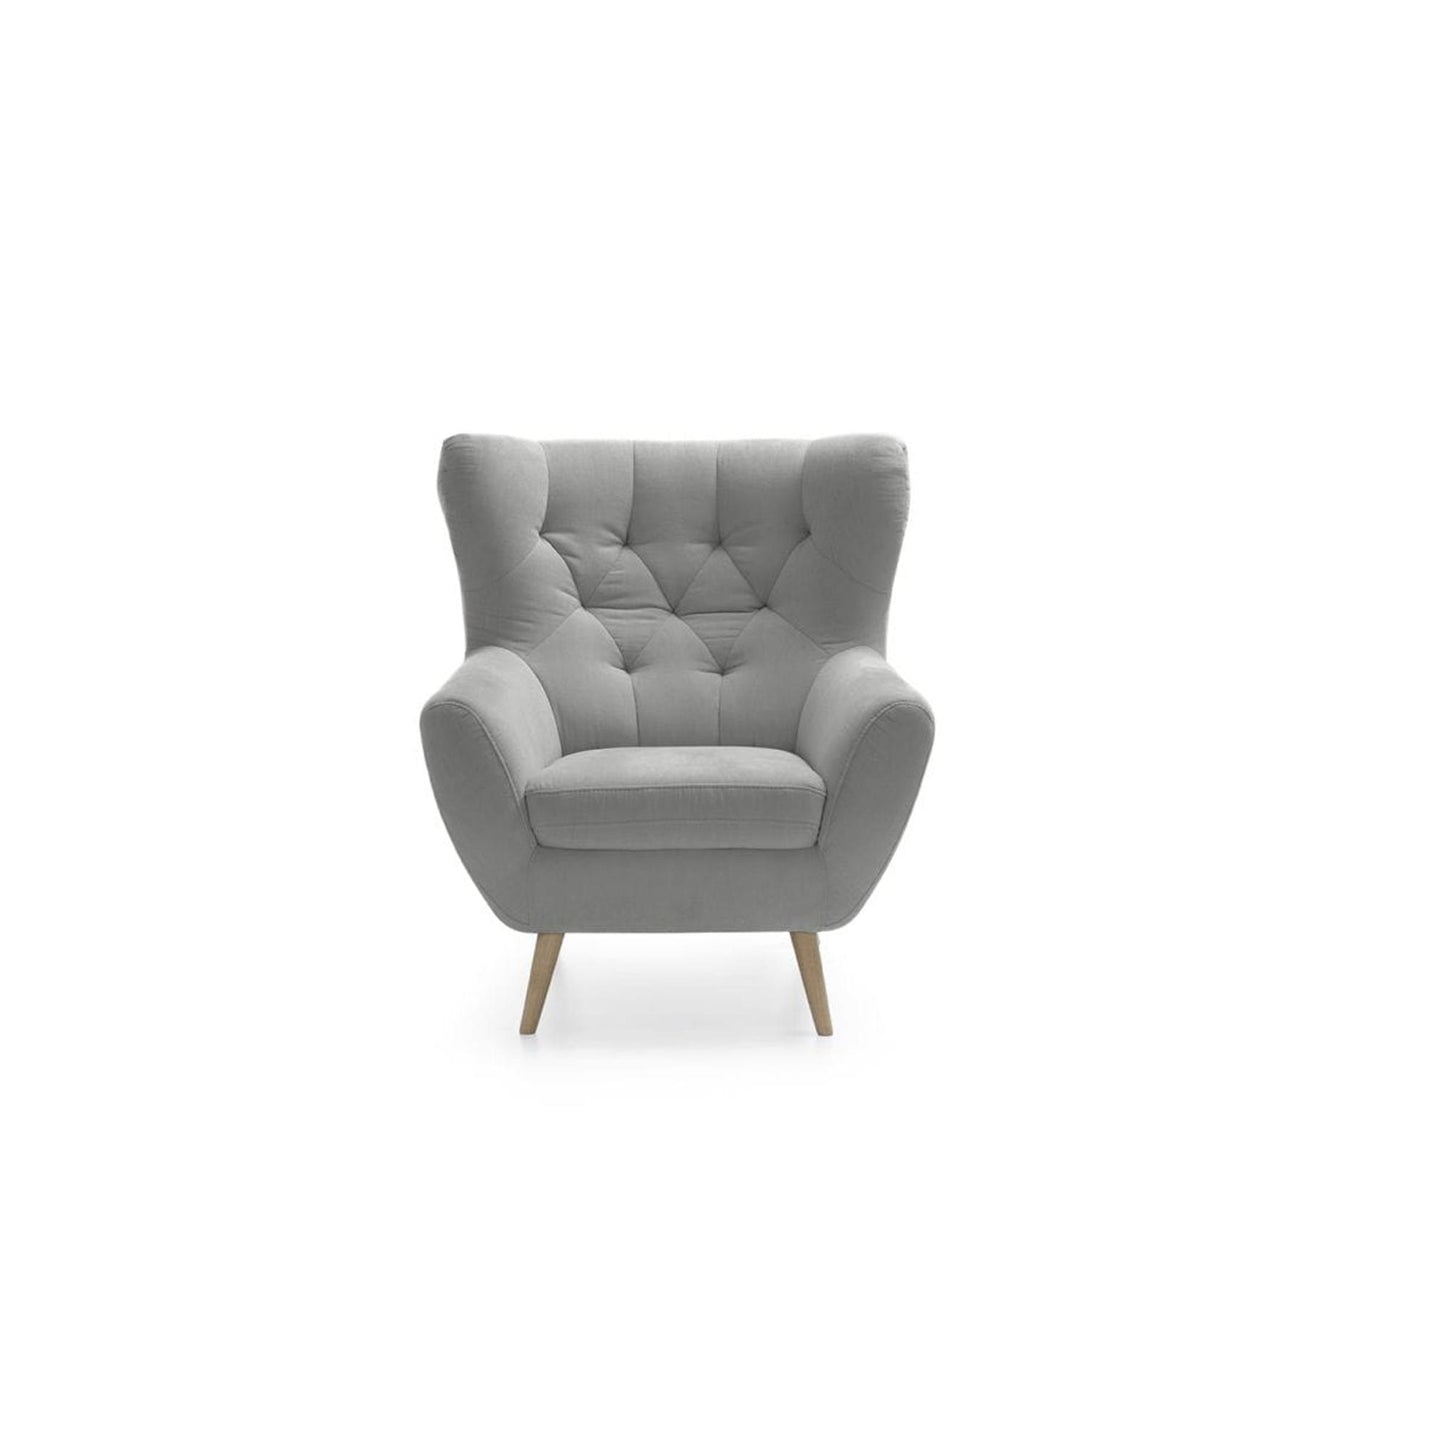 Voss Chair in Light Gray